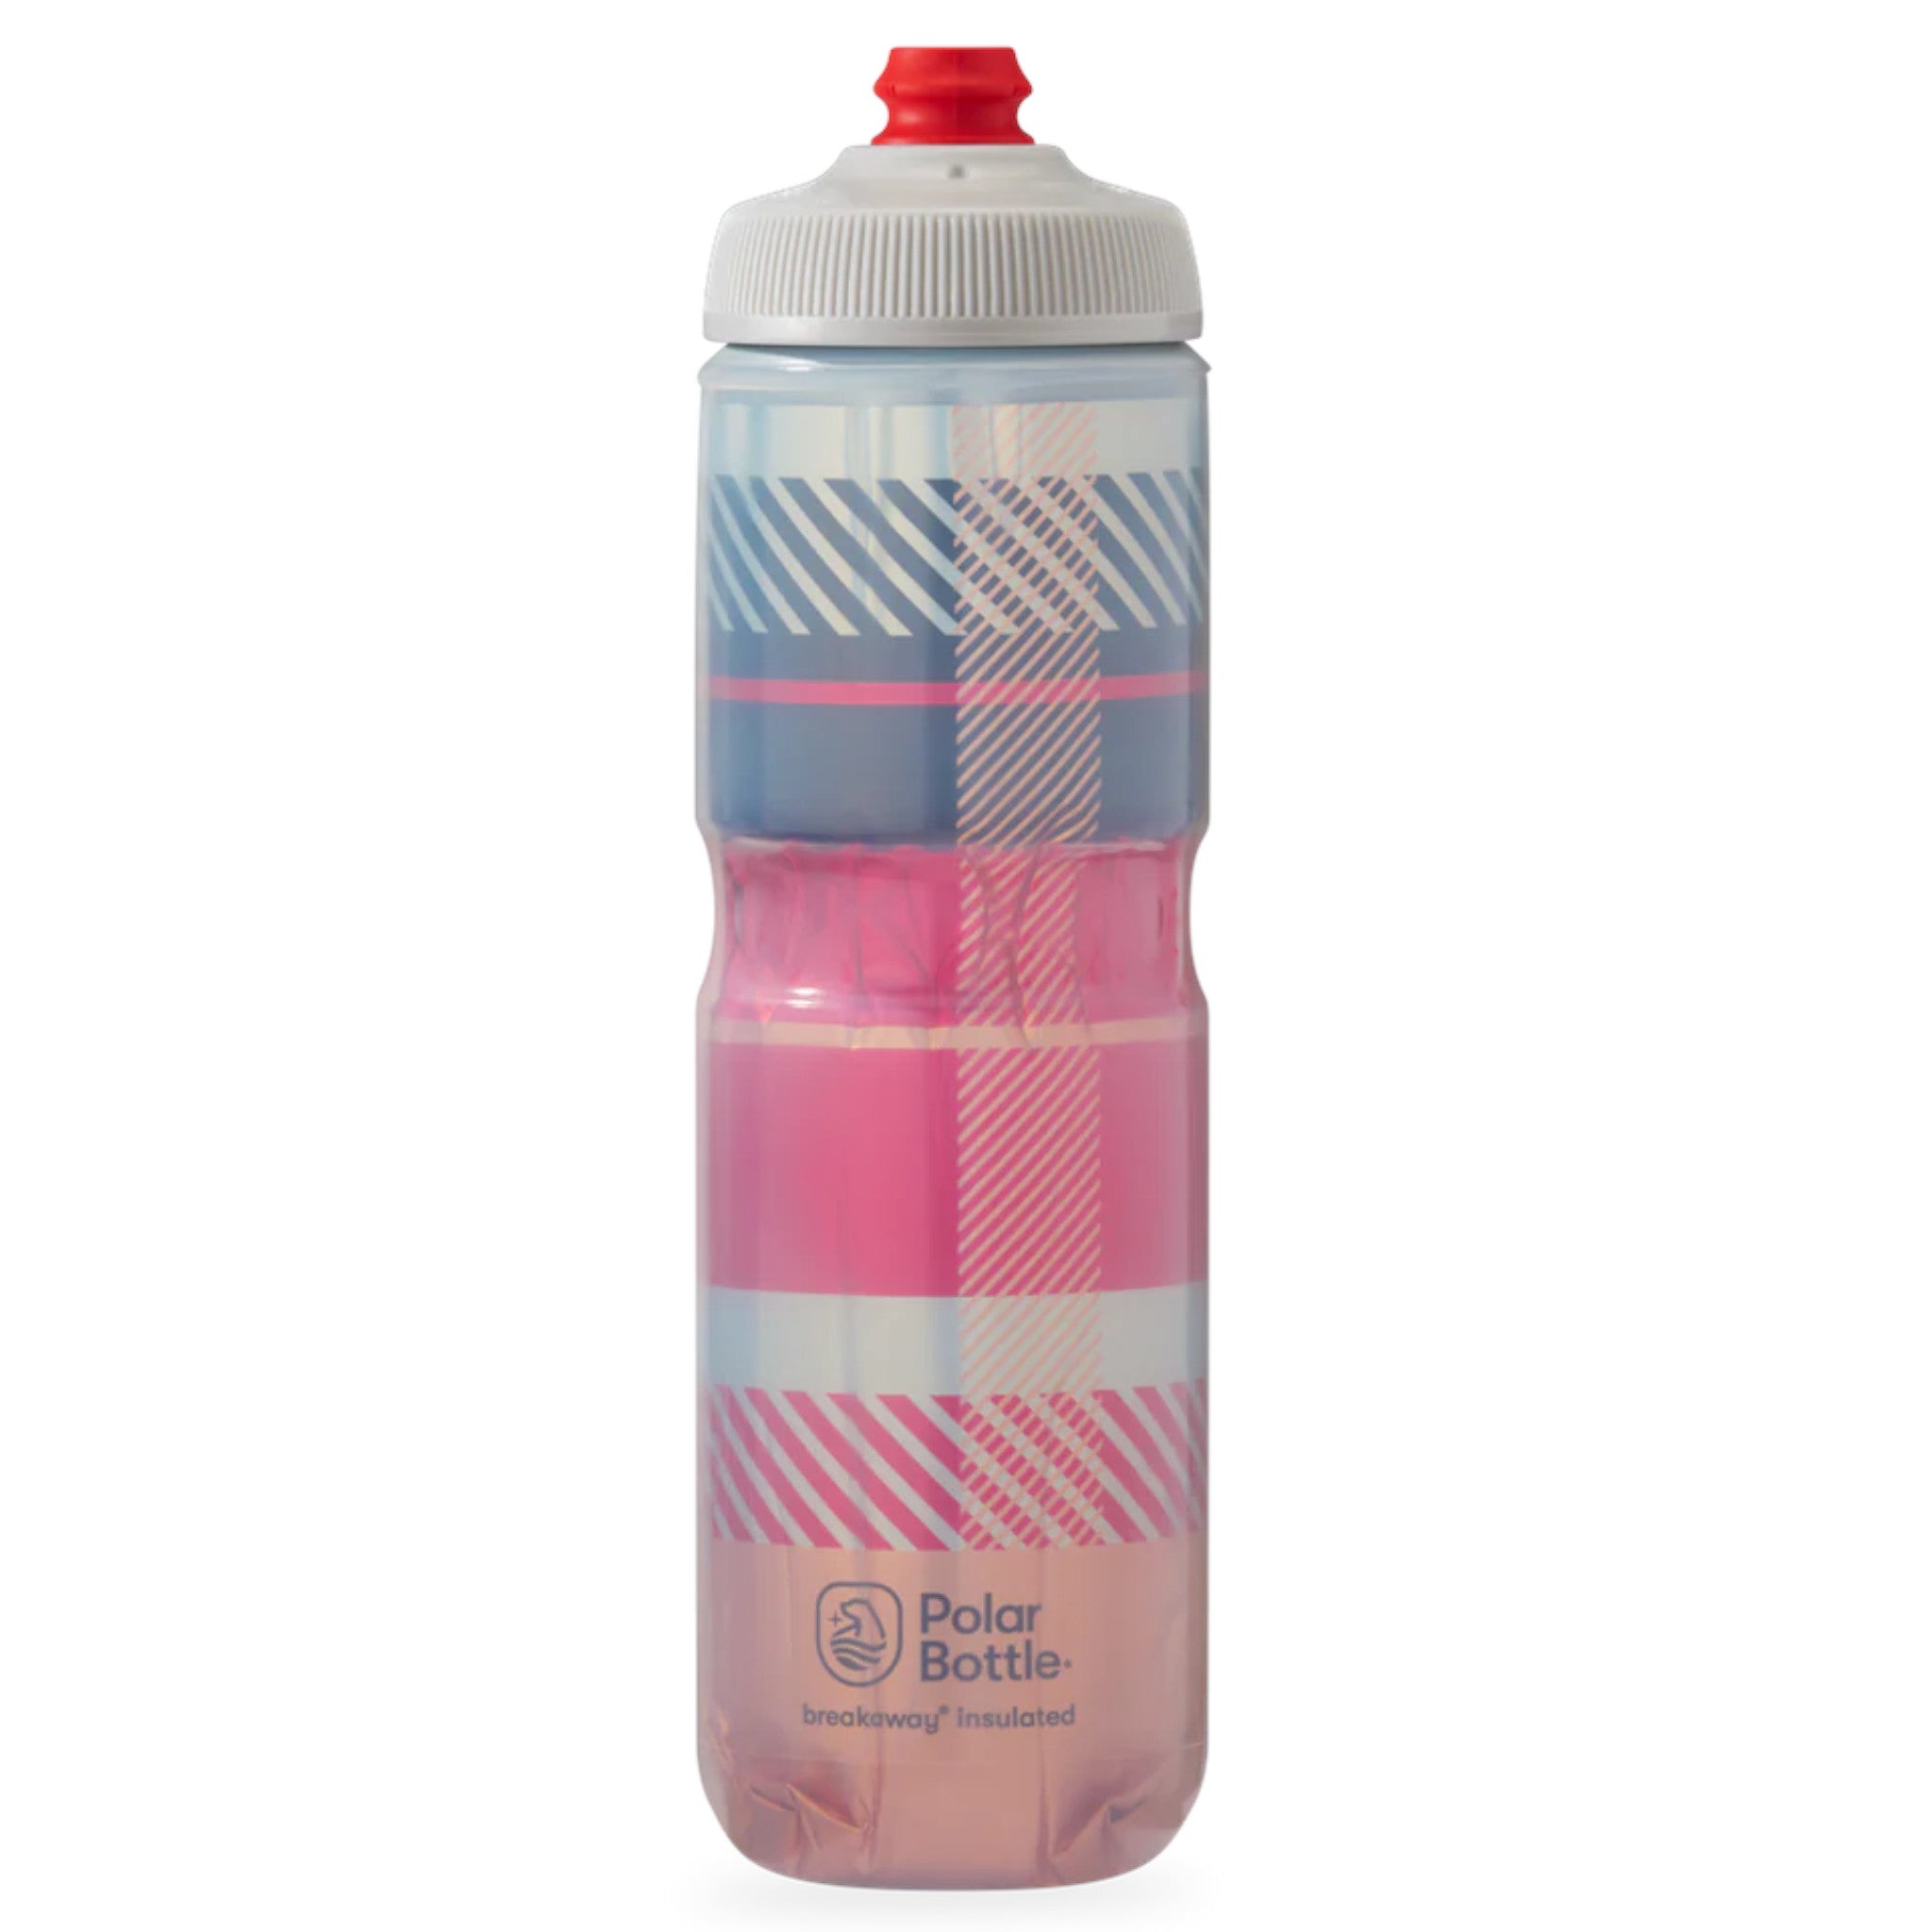 Buy bonfire-red-orange Polar Breakaway Insulated Water Bottle 24oz